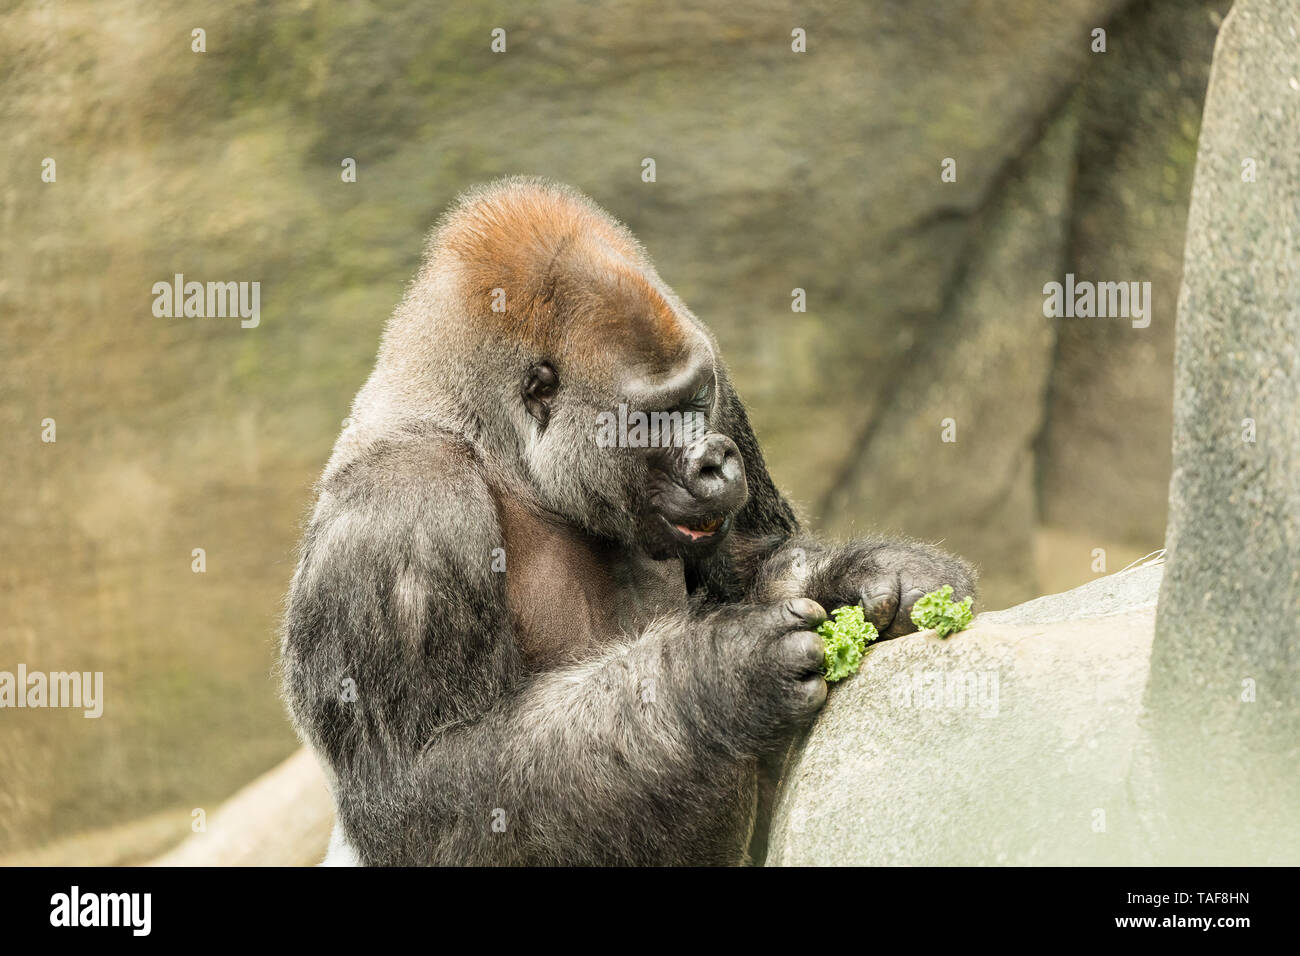 A gorilla holding onto some lettuce to eat. Stock Photo